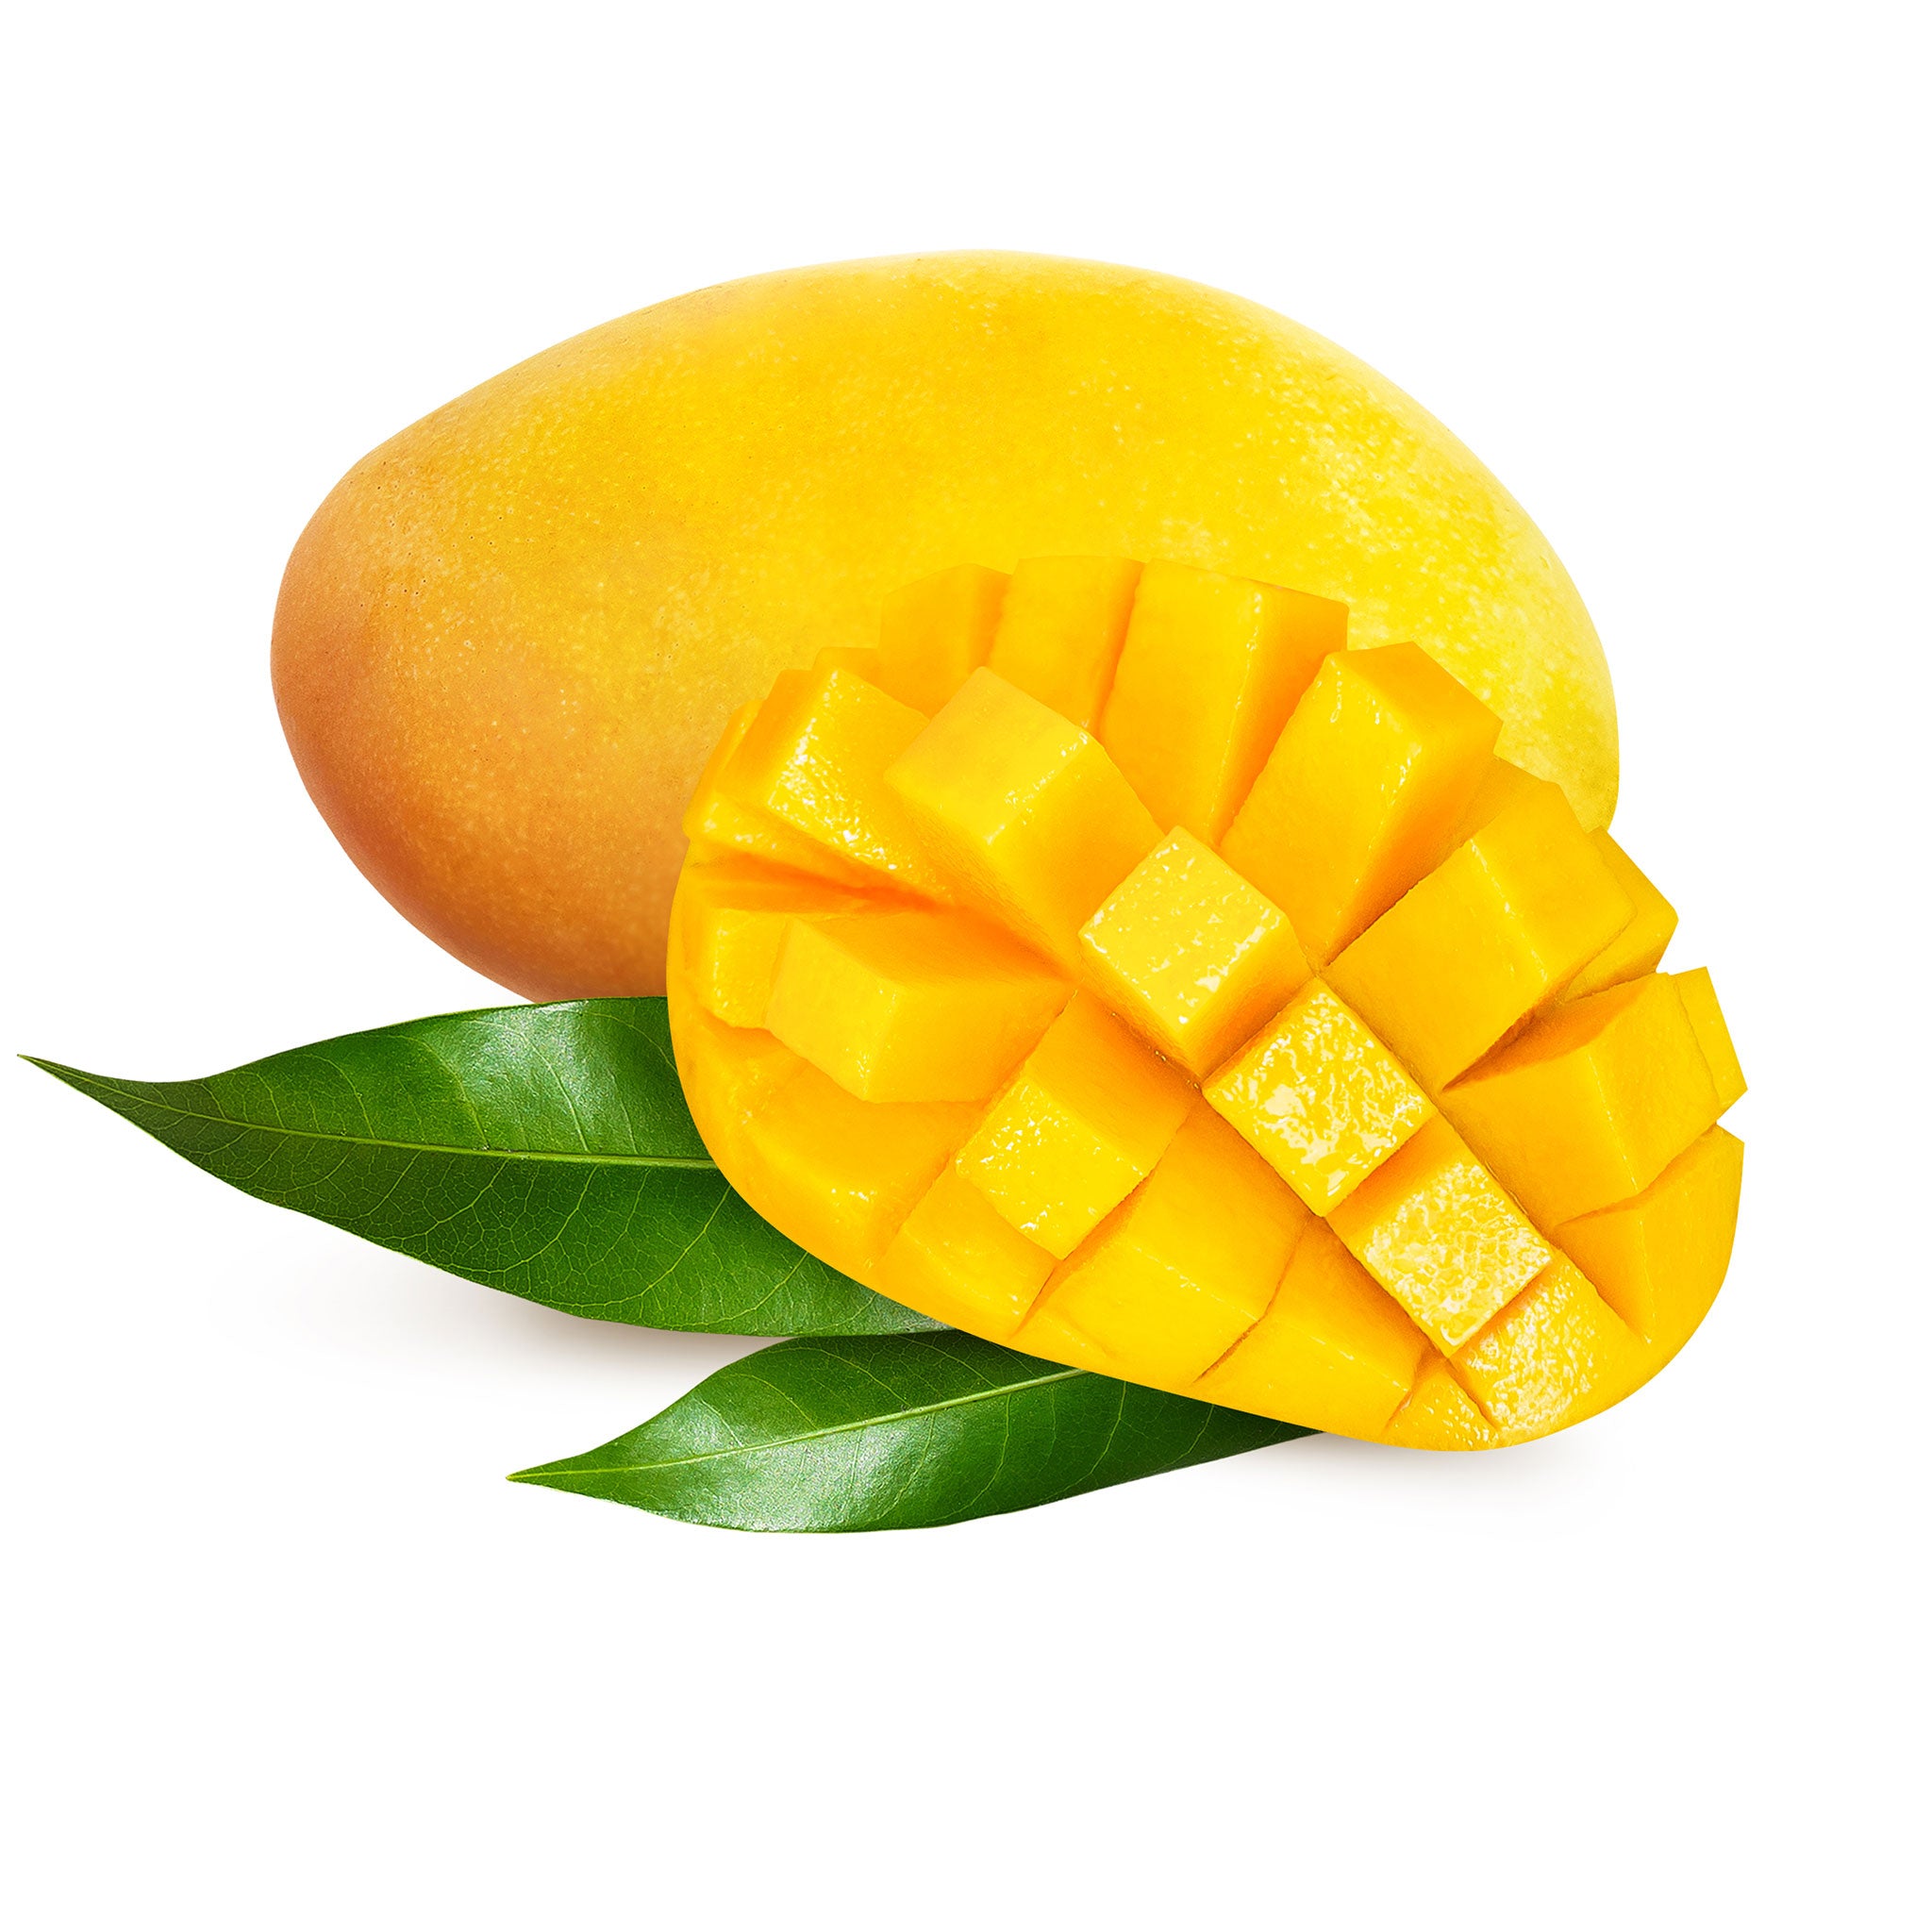 Fresh Thai Sweet Yellow Mango Fruit - Imported Weekly from Thailand